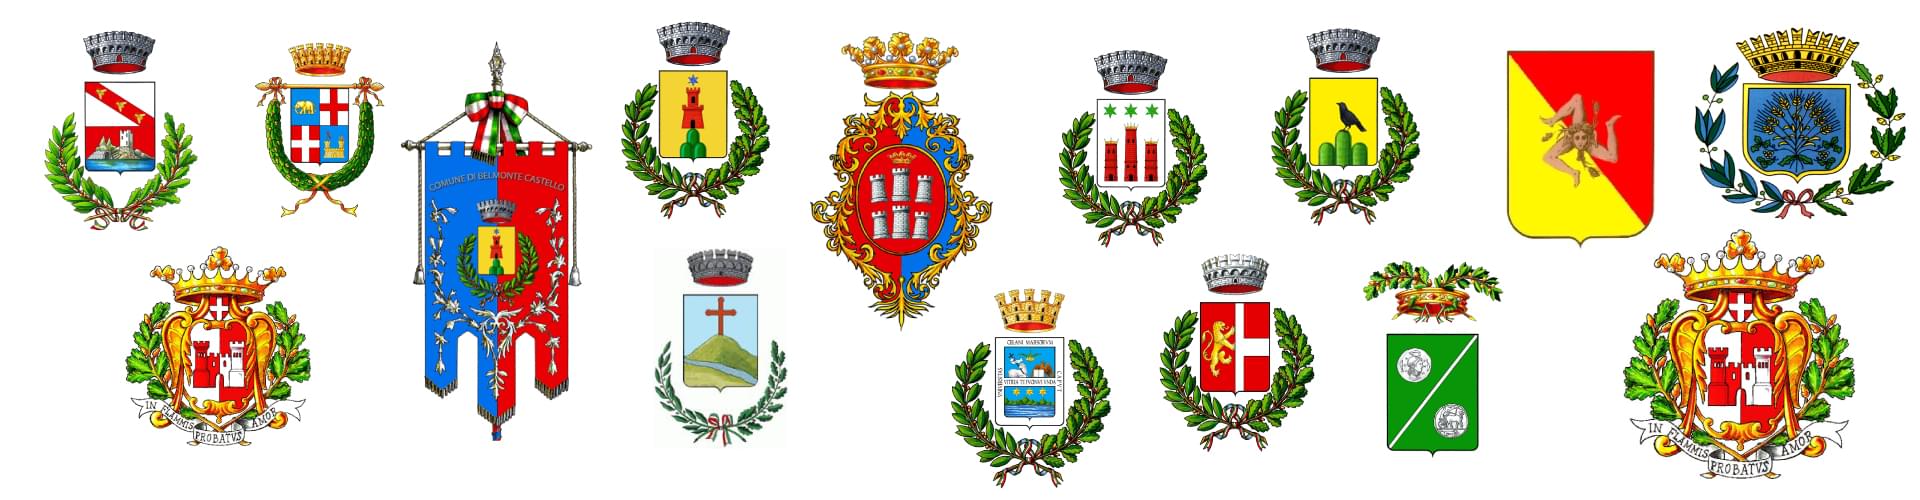 armoiries italiennes